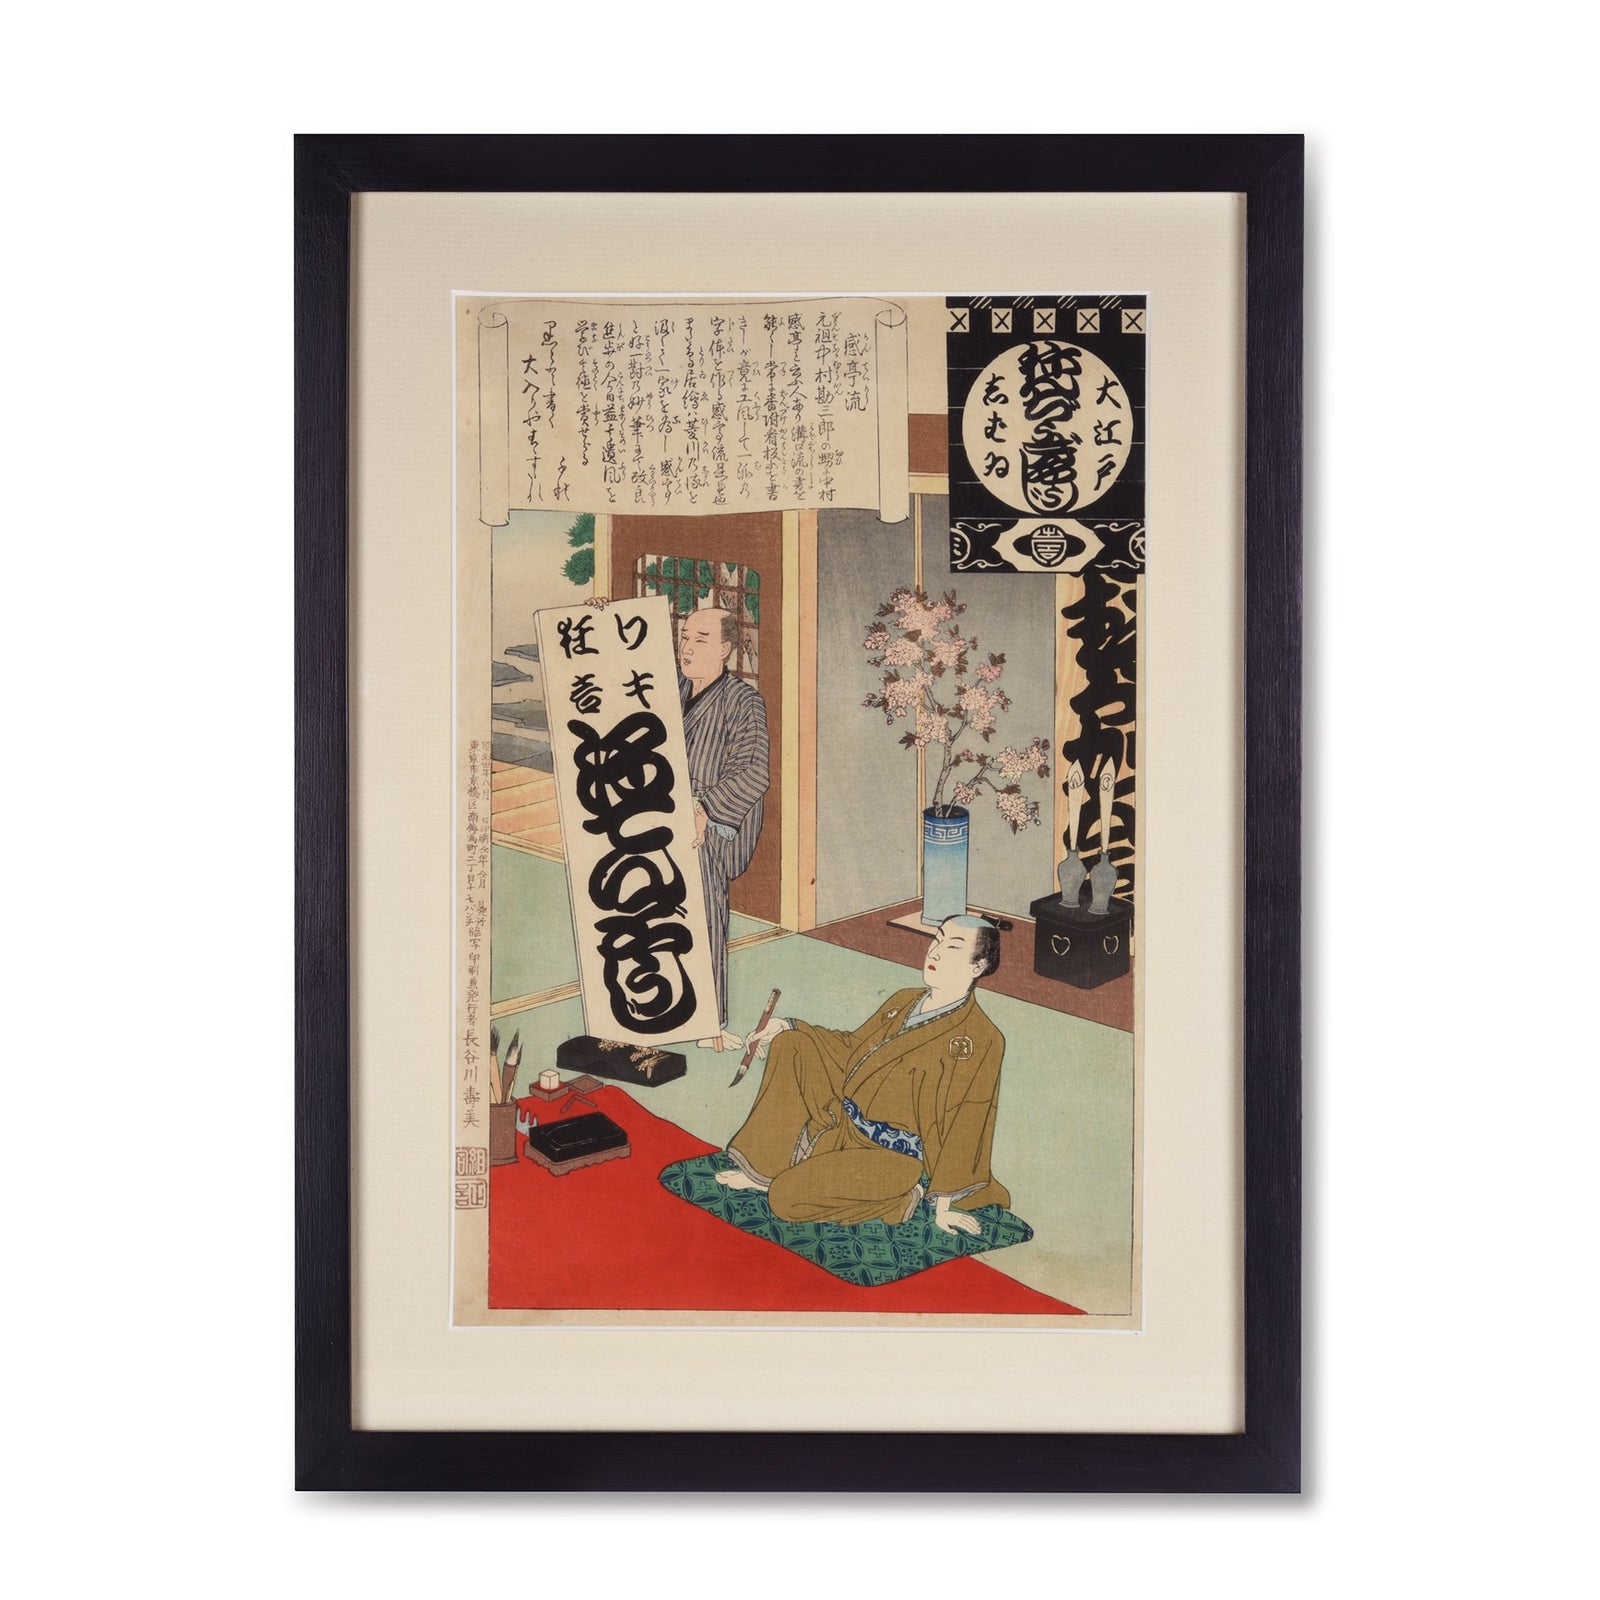 A Japanese Woodblock Print by Adachi Ginko - 19thC - 35x1.6x47 - J232V1